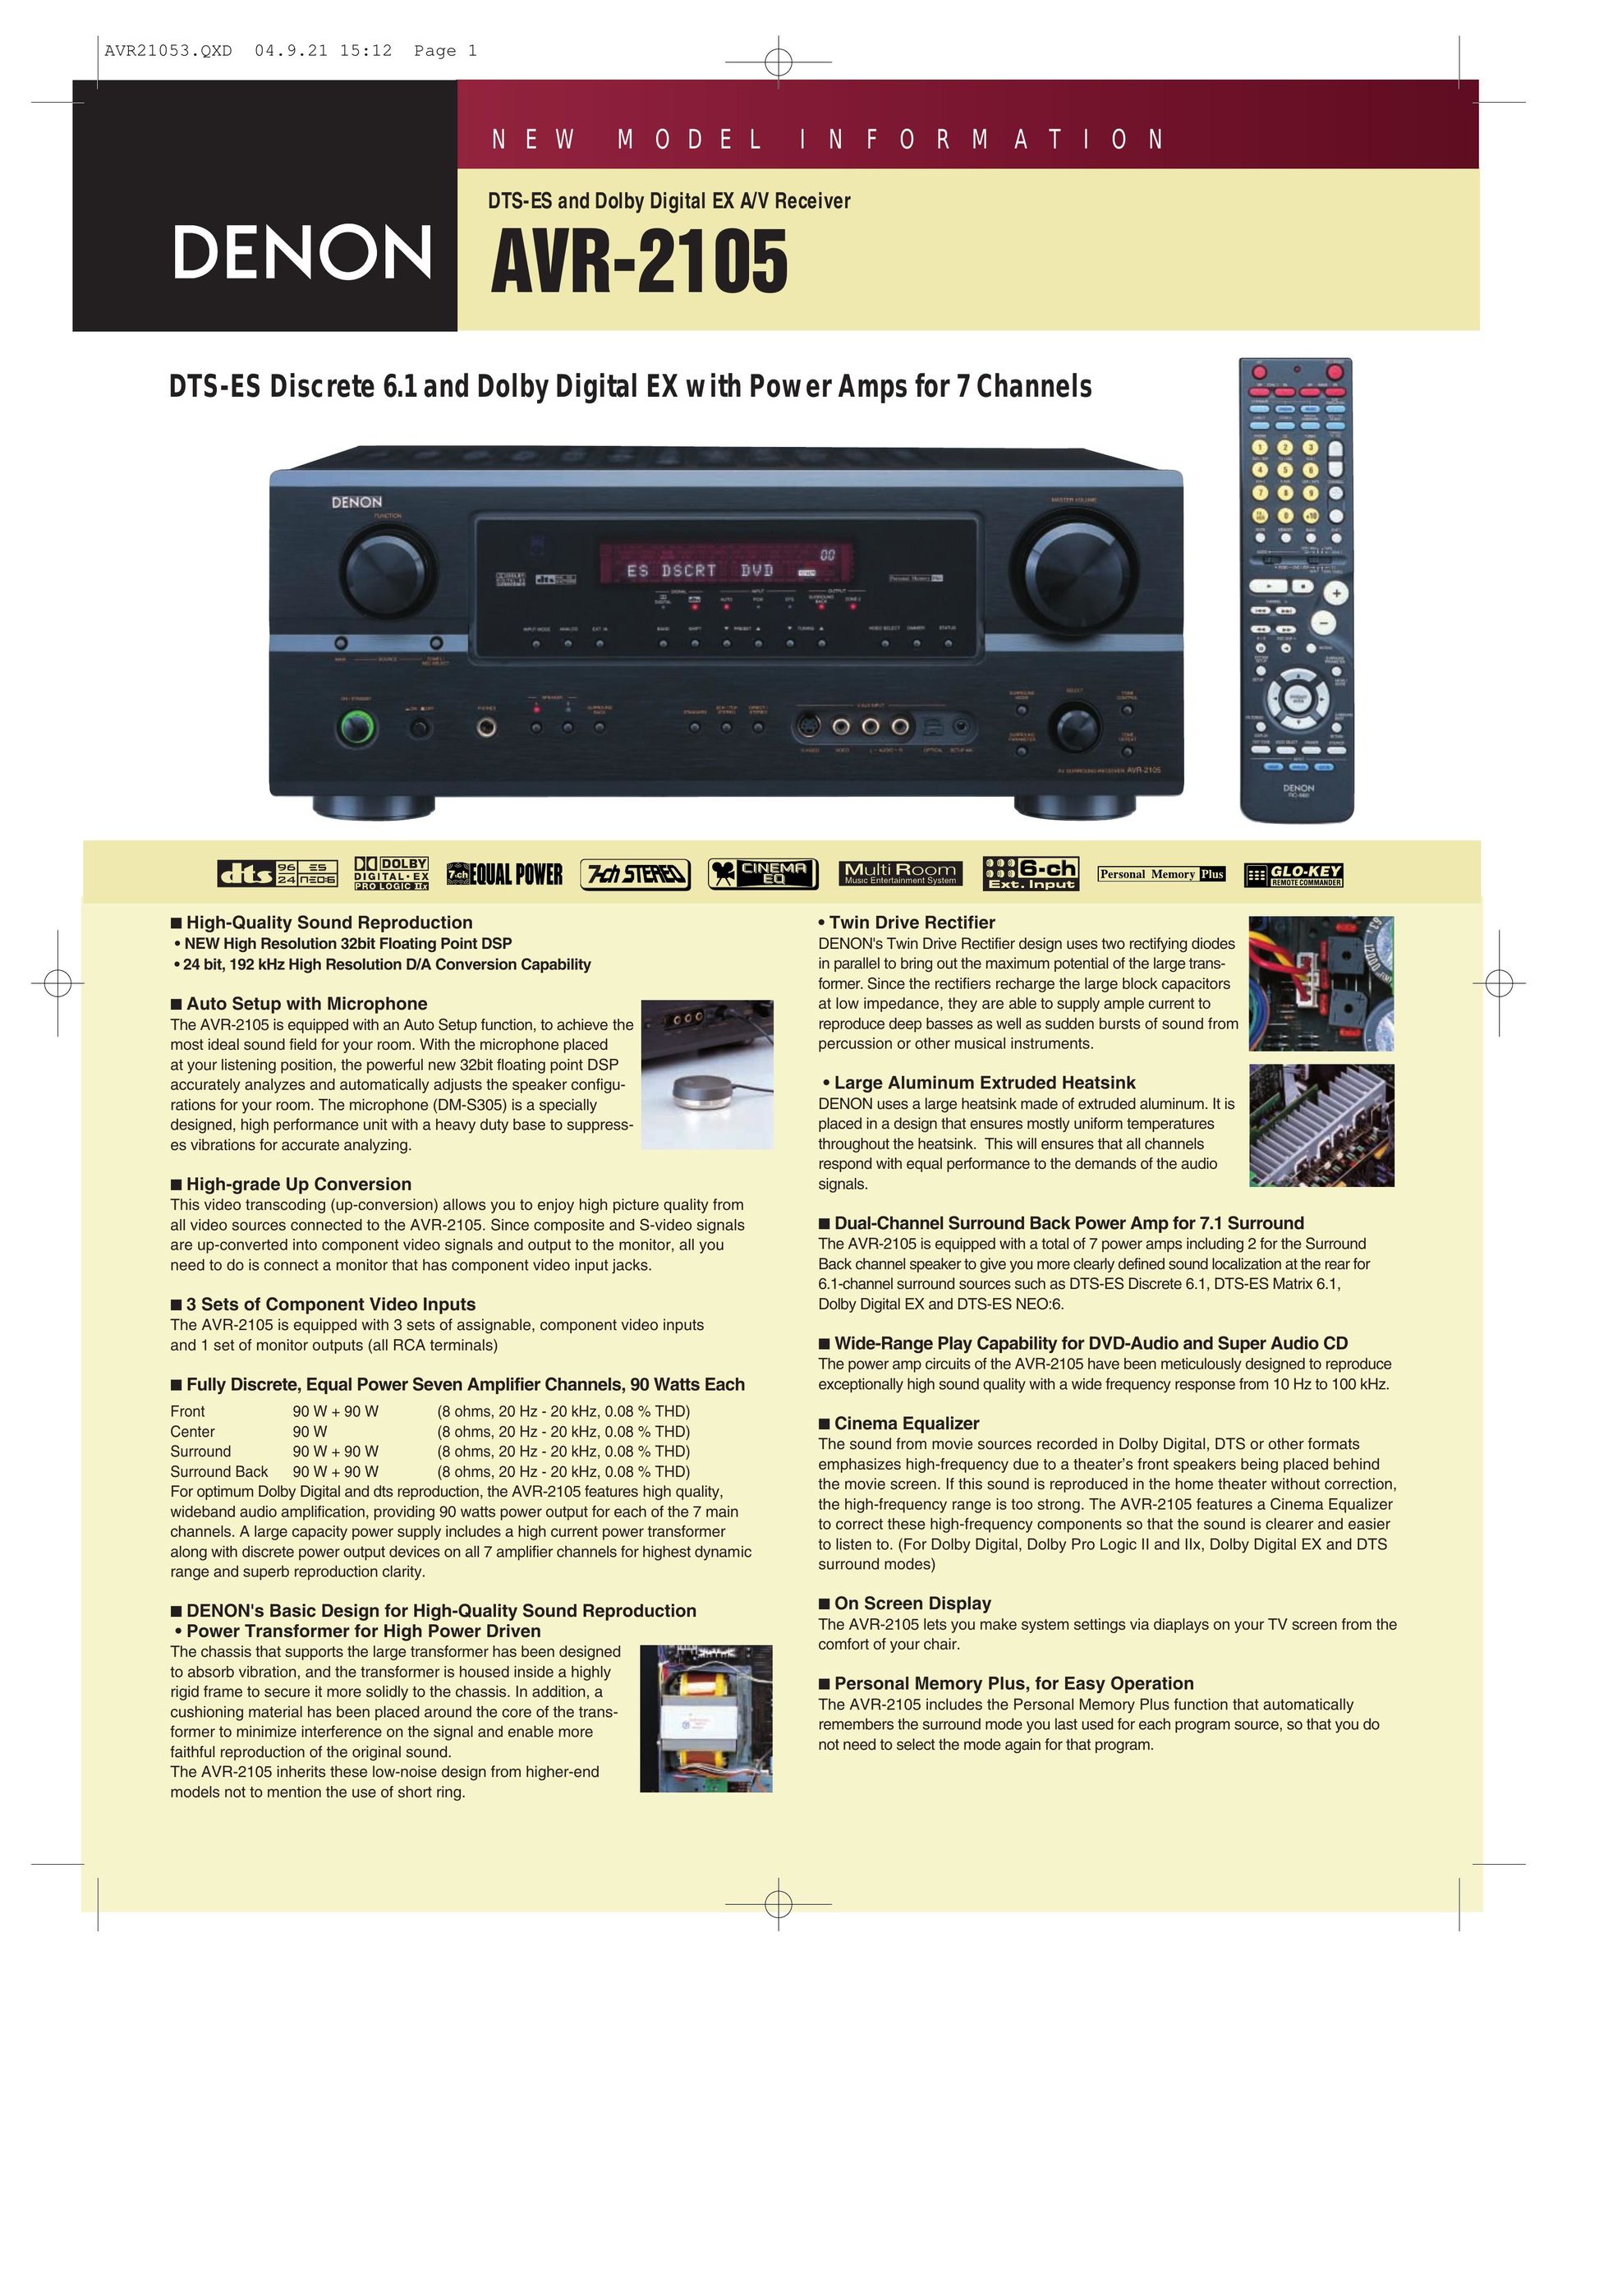 Denon AVR-2105 Stereo System User Manual